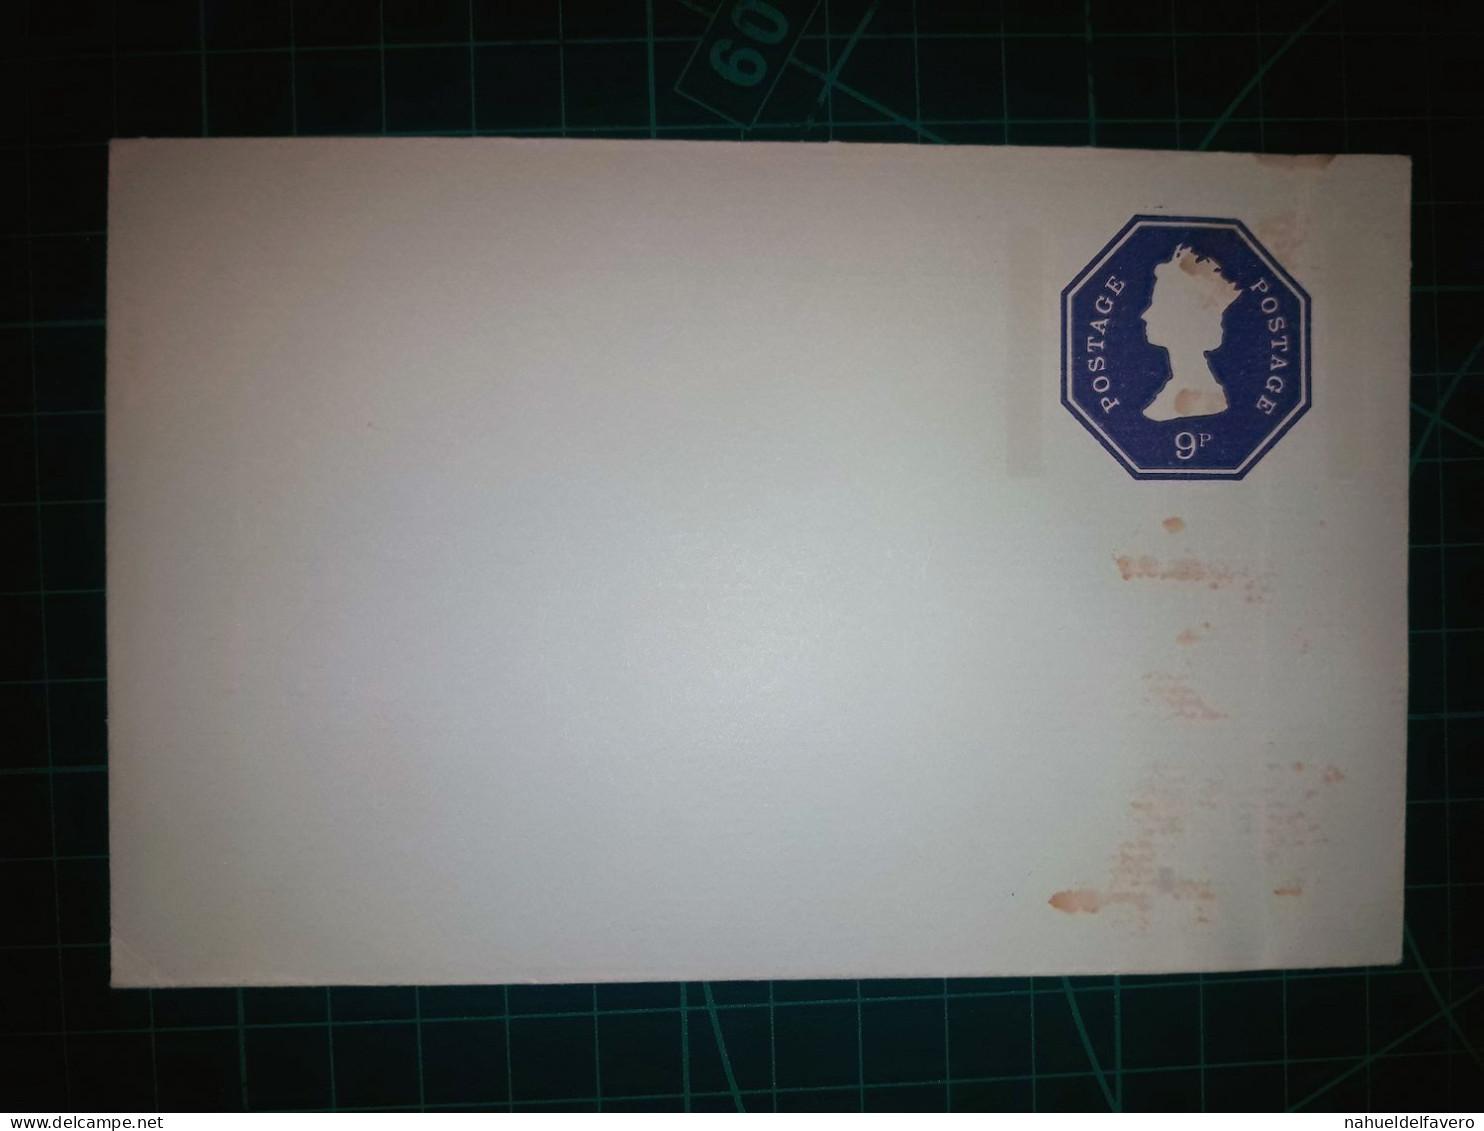 ANGLETERRE, Enveloppe Postale Entière Avec Hexagone Bleu (9 Pence). Non Circulée. - Used Stamps